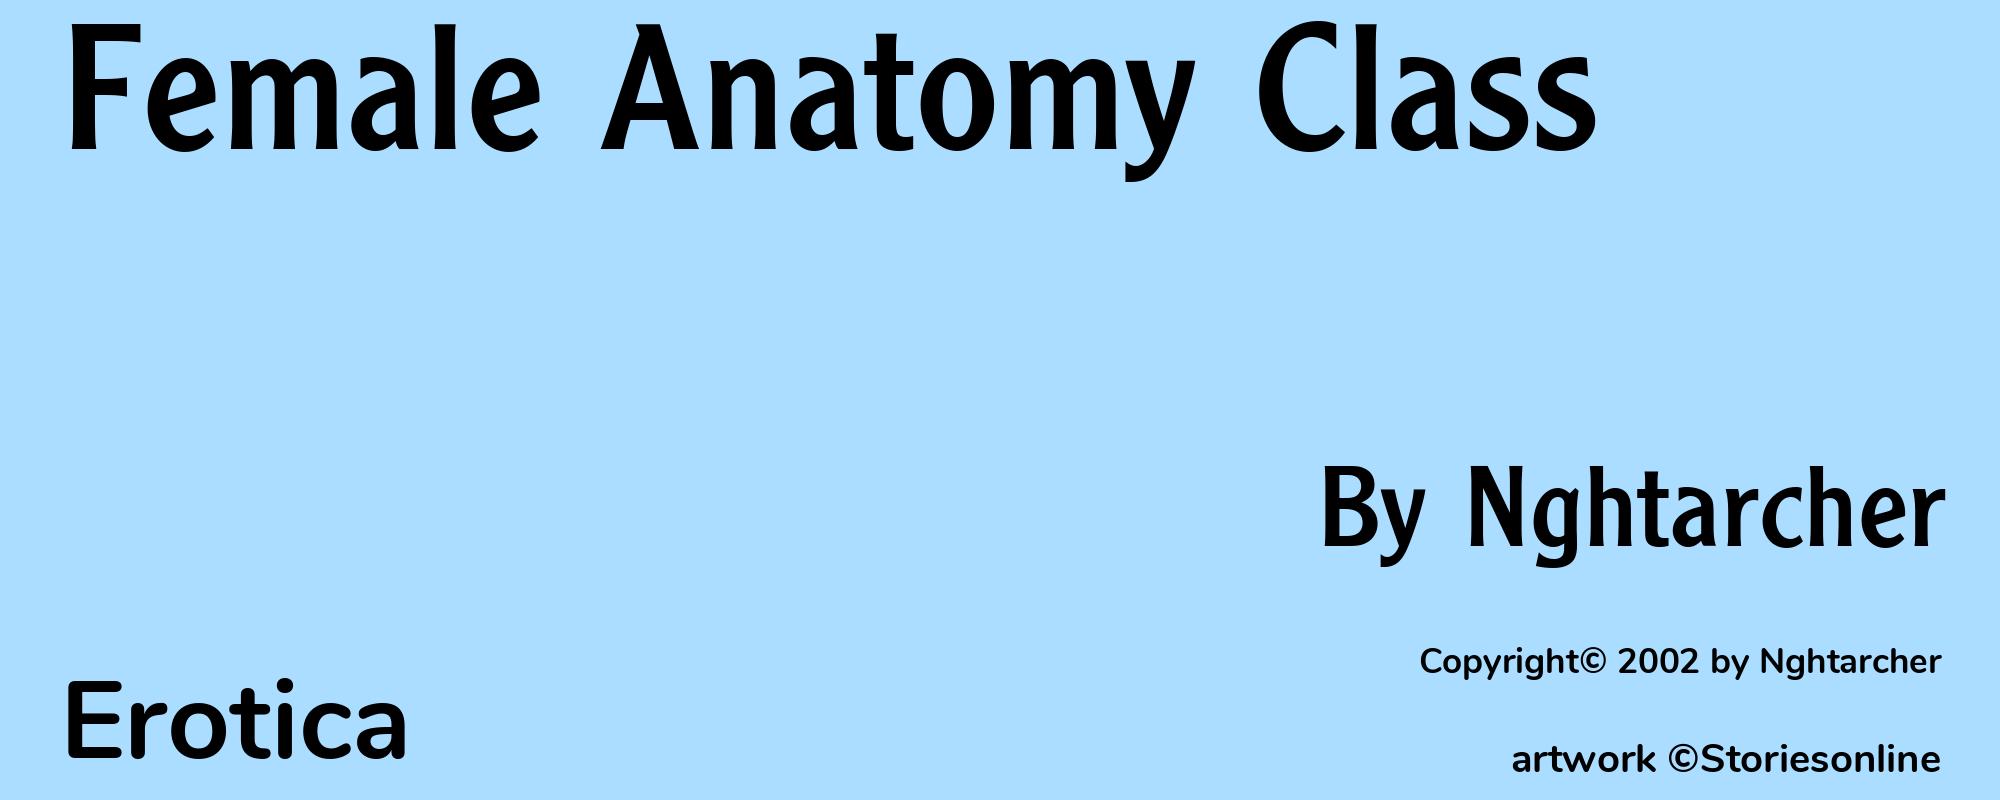 Female Anatomy Class - Cover